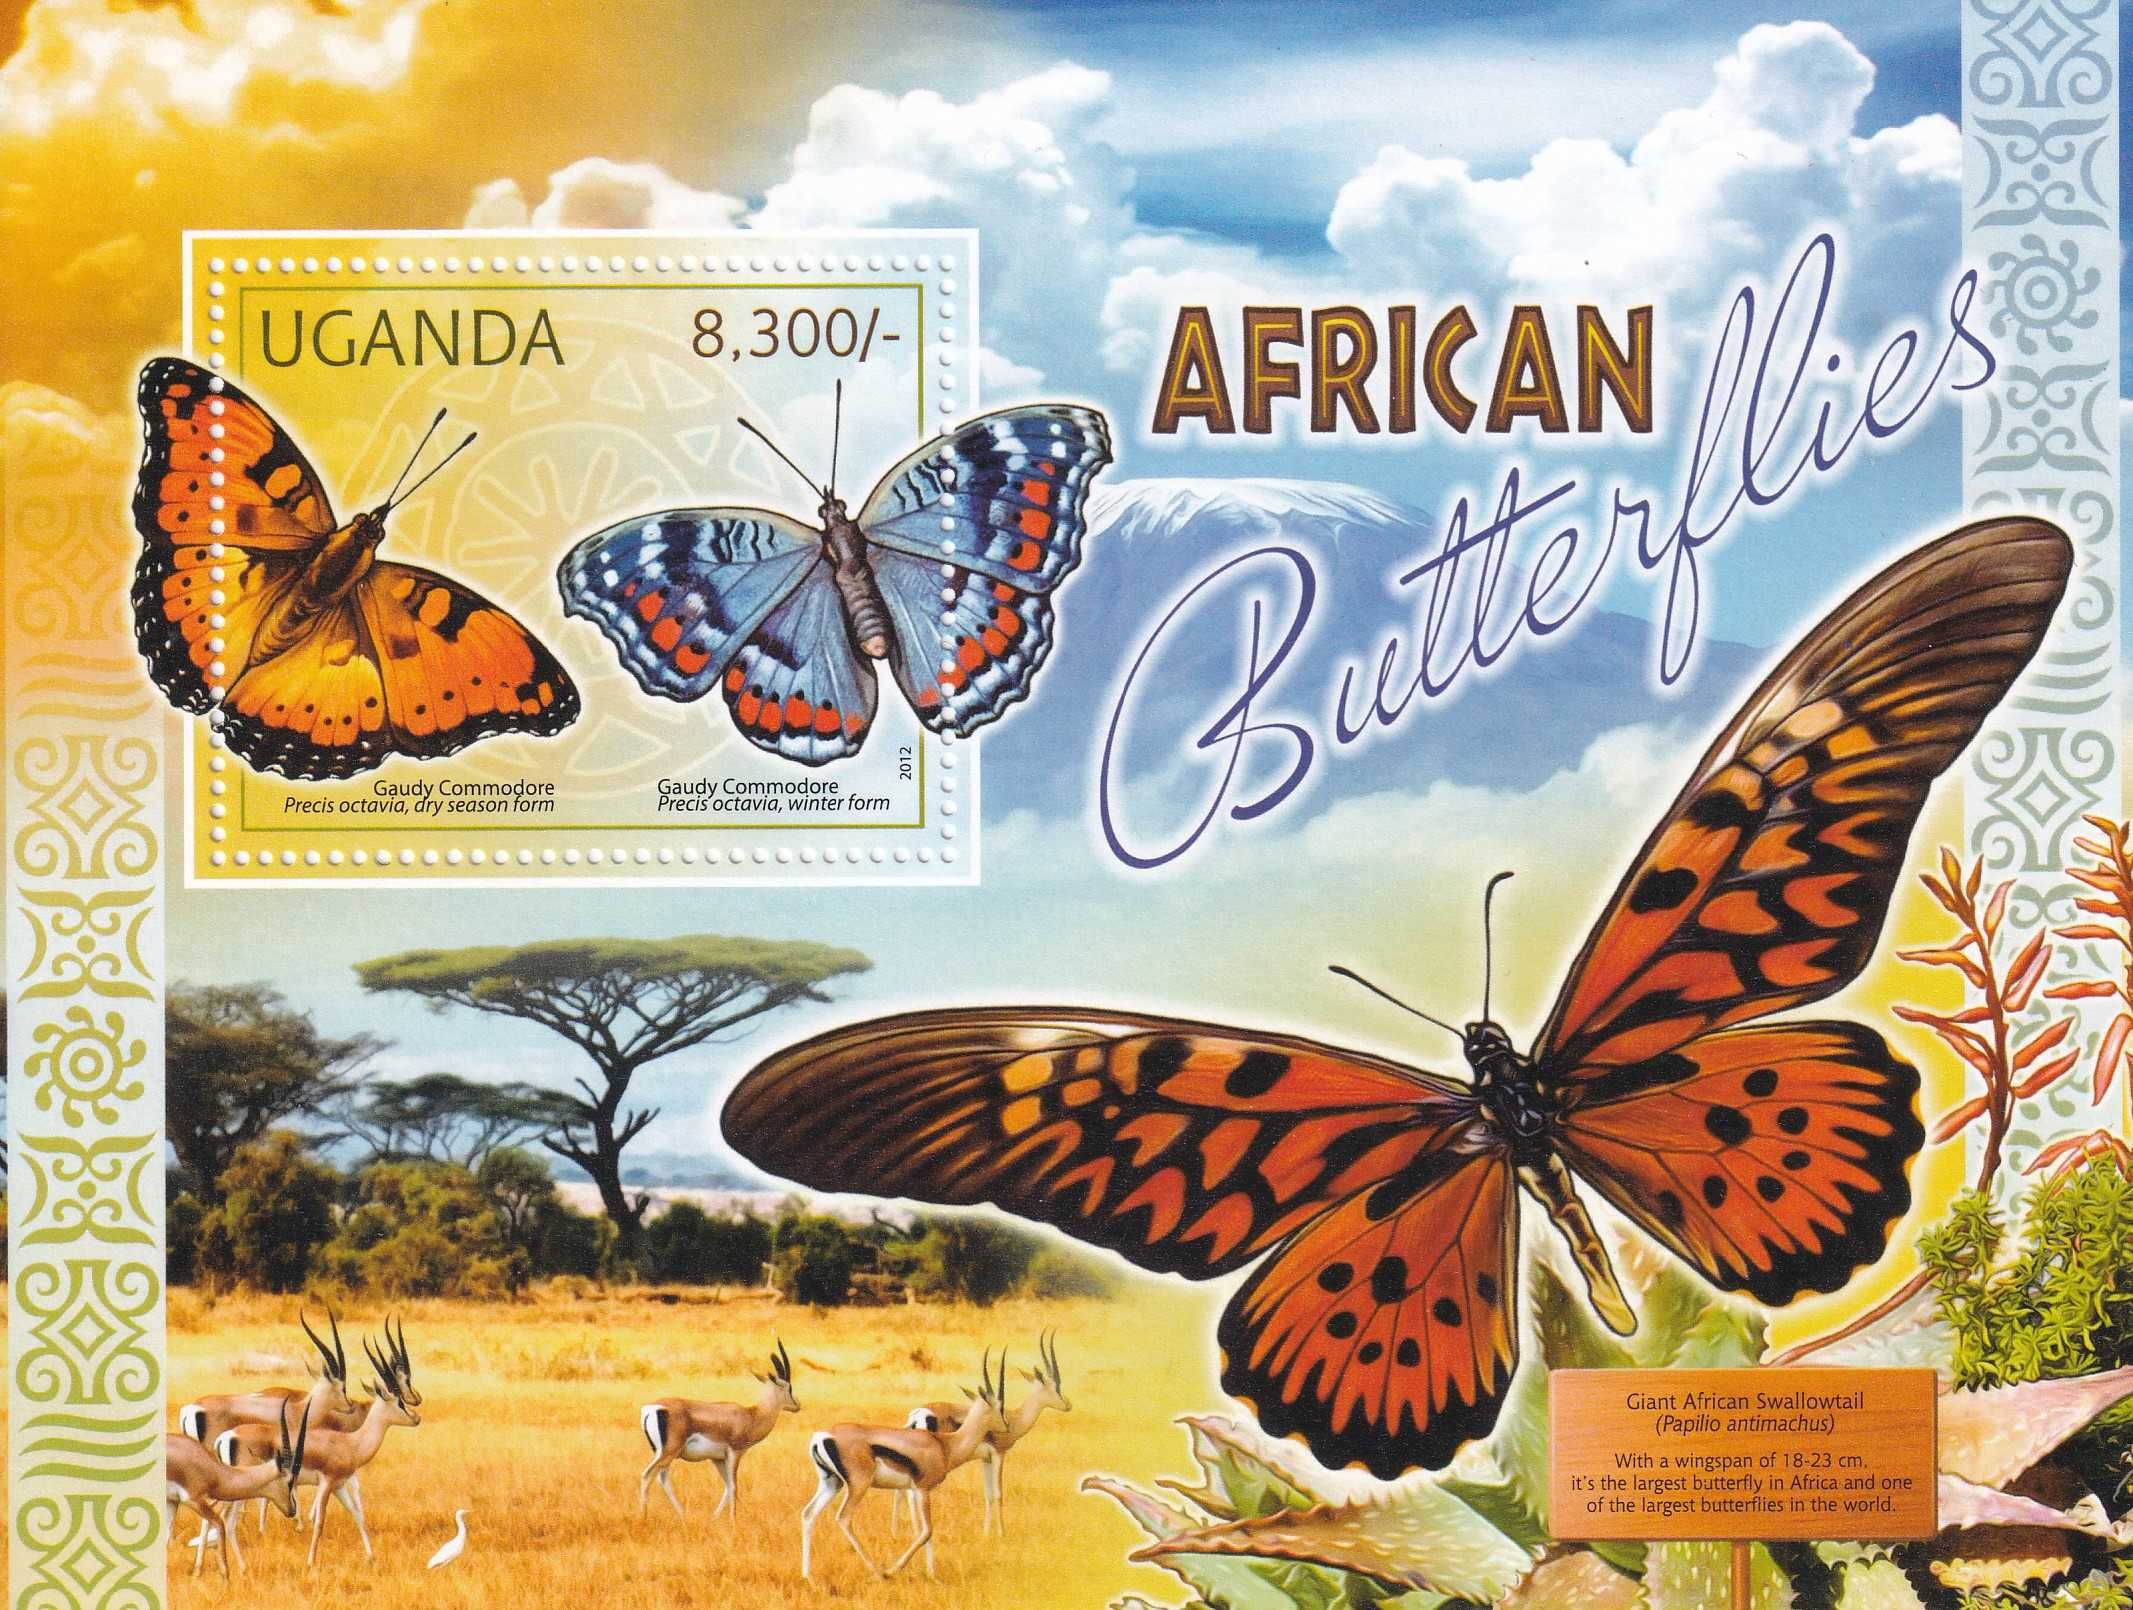 Uganda 2012 cena 6,80 zł kat.4,50€ - motyle